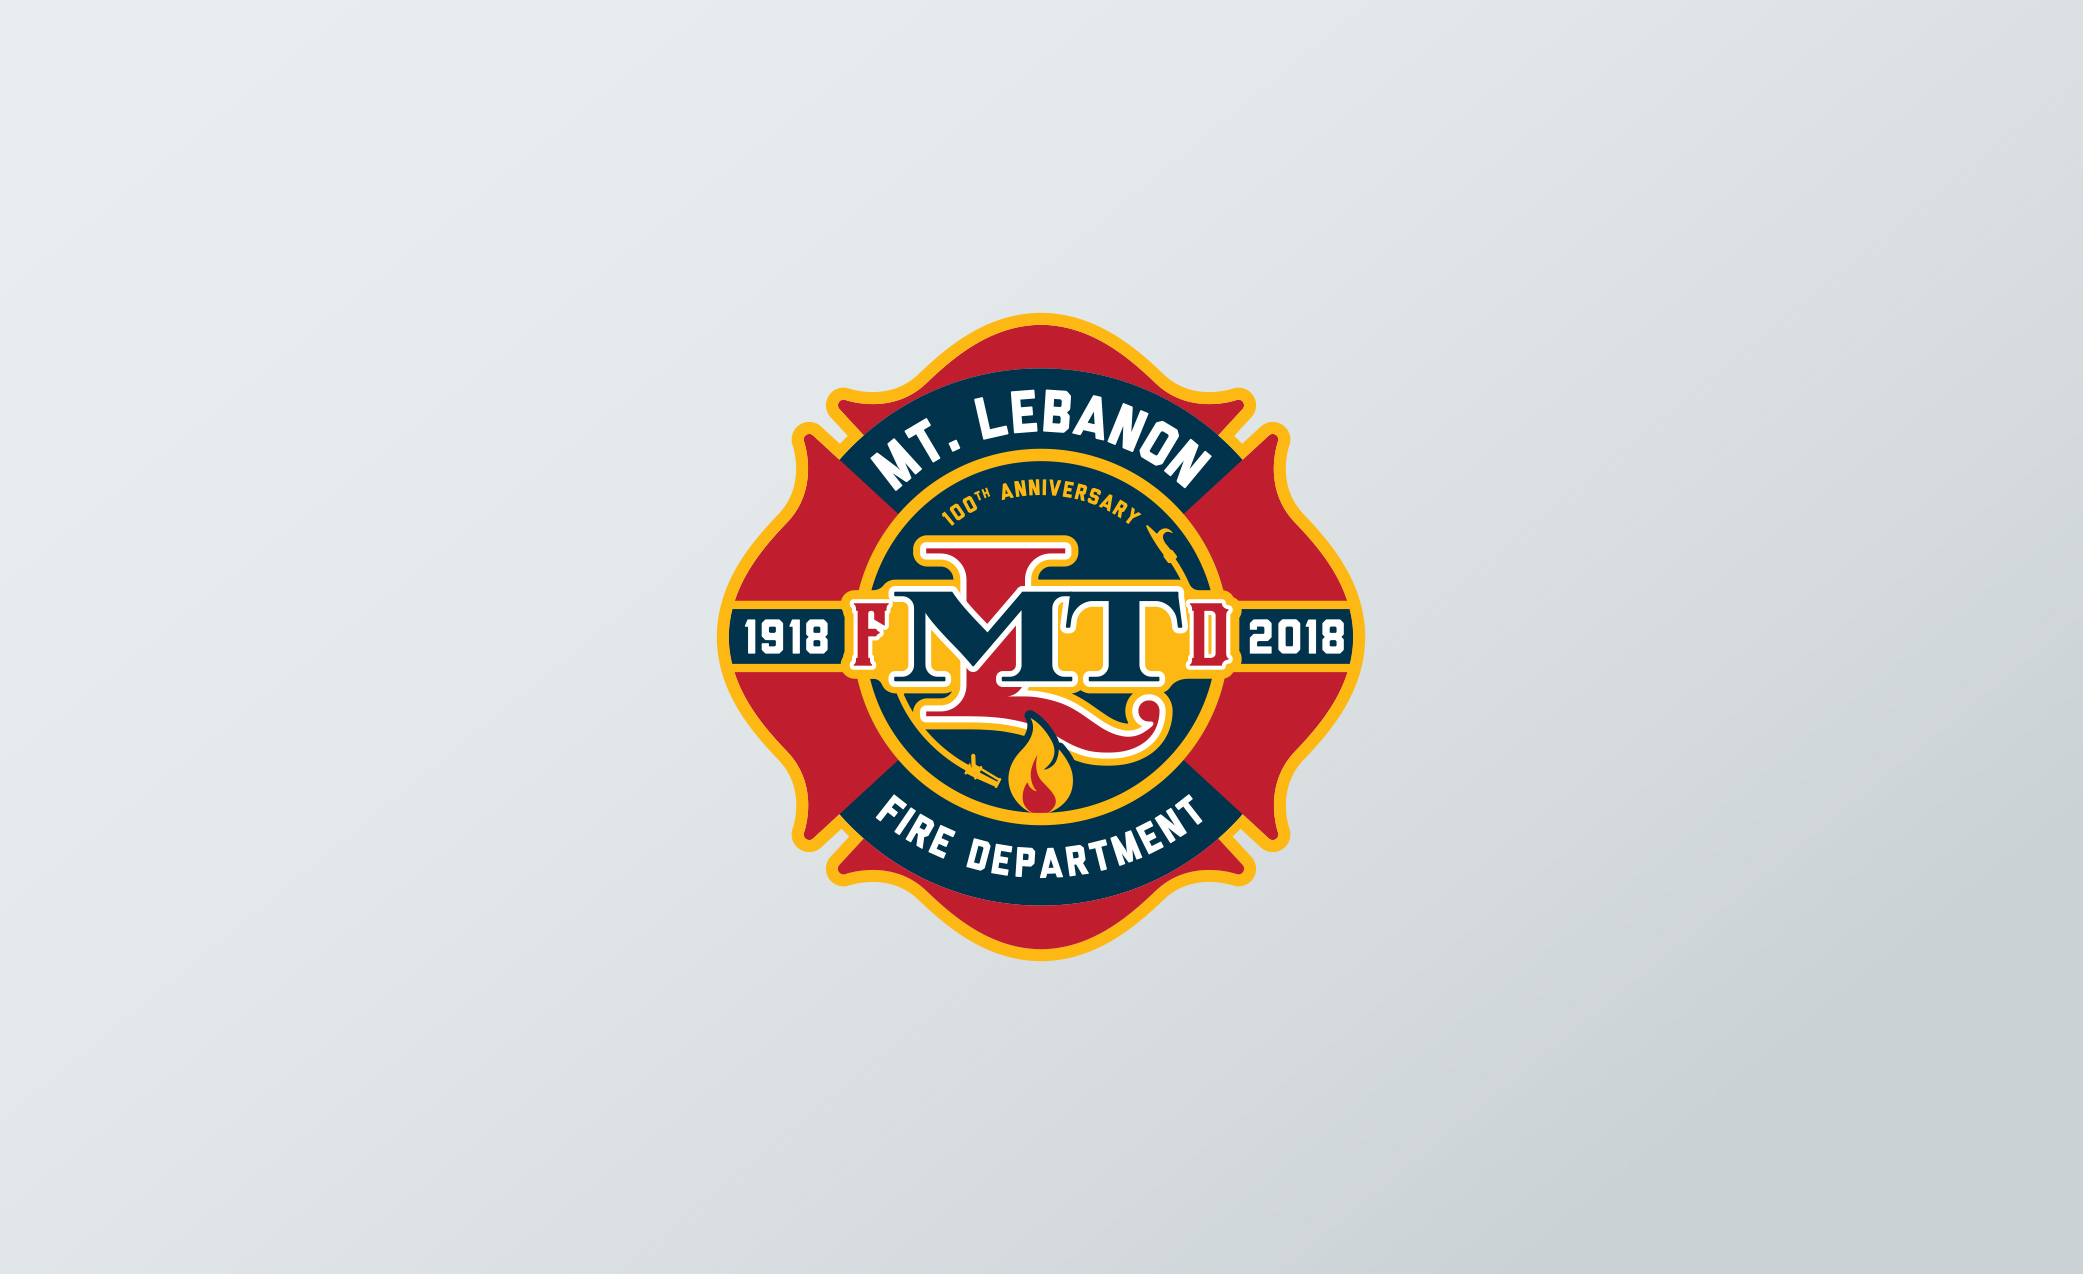 Mount Lebanon Fire Department brand communications